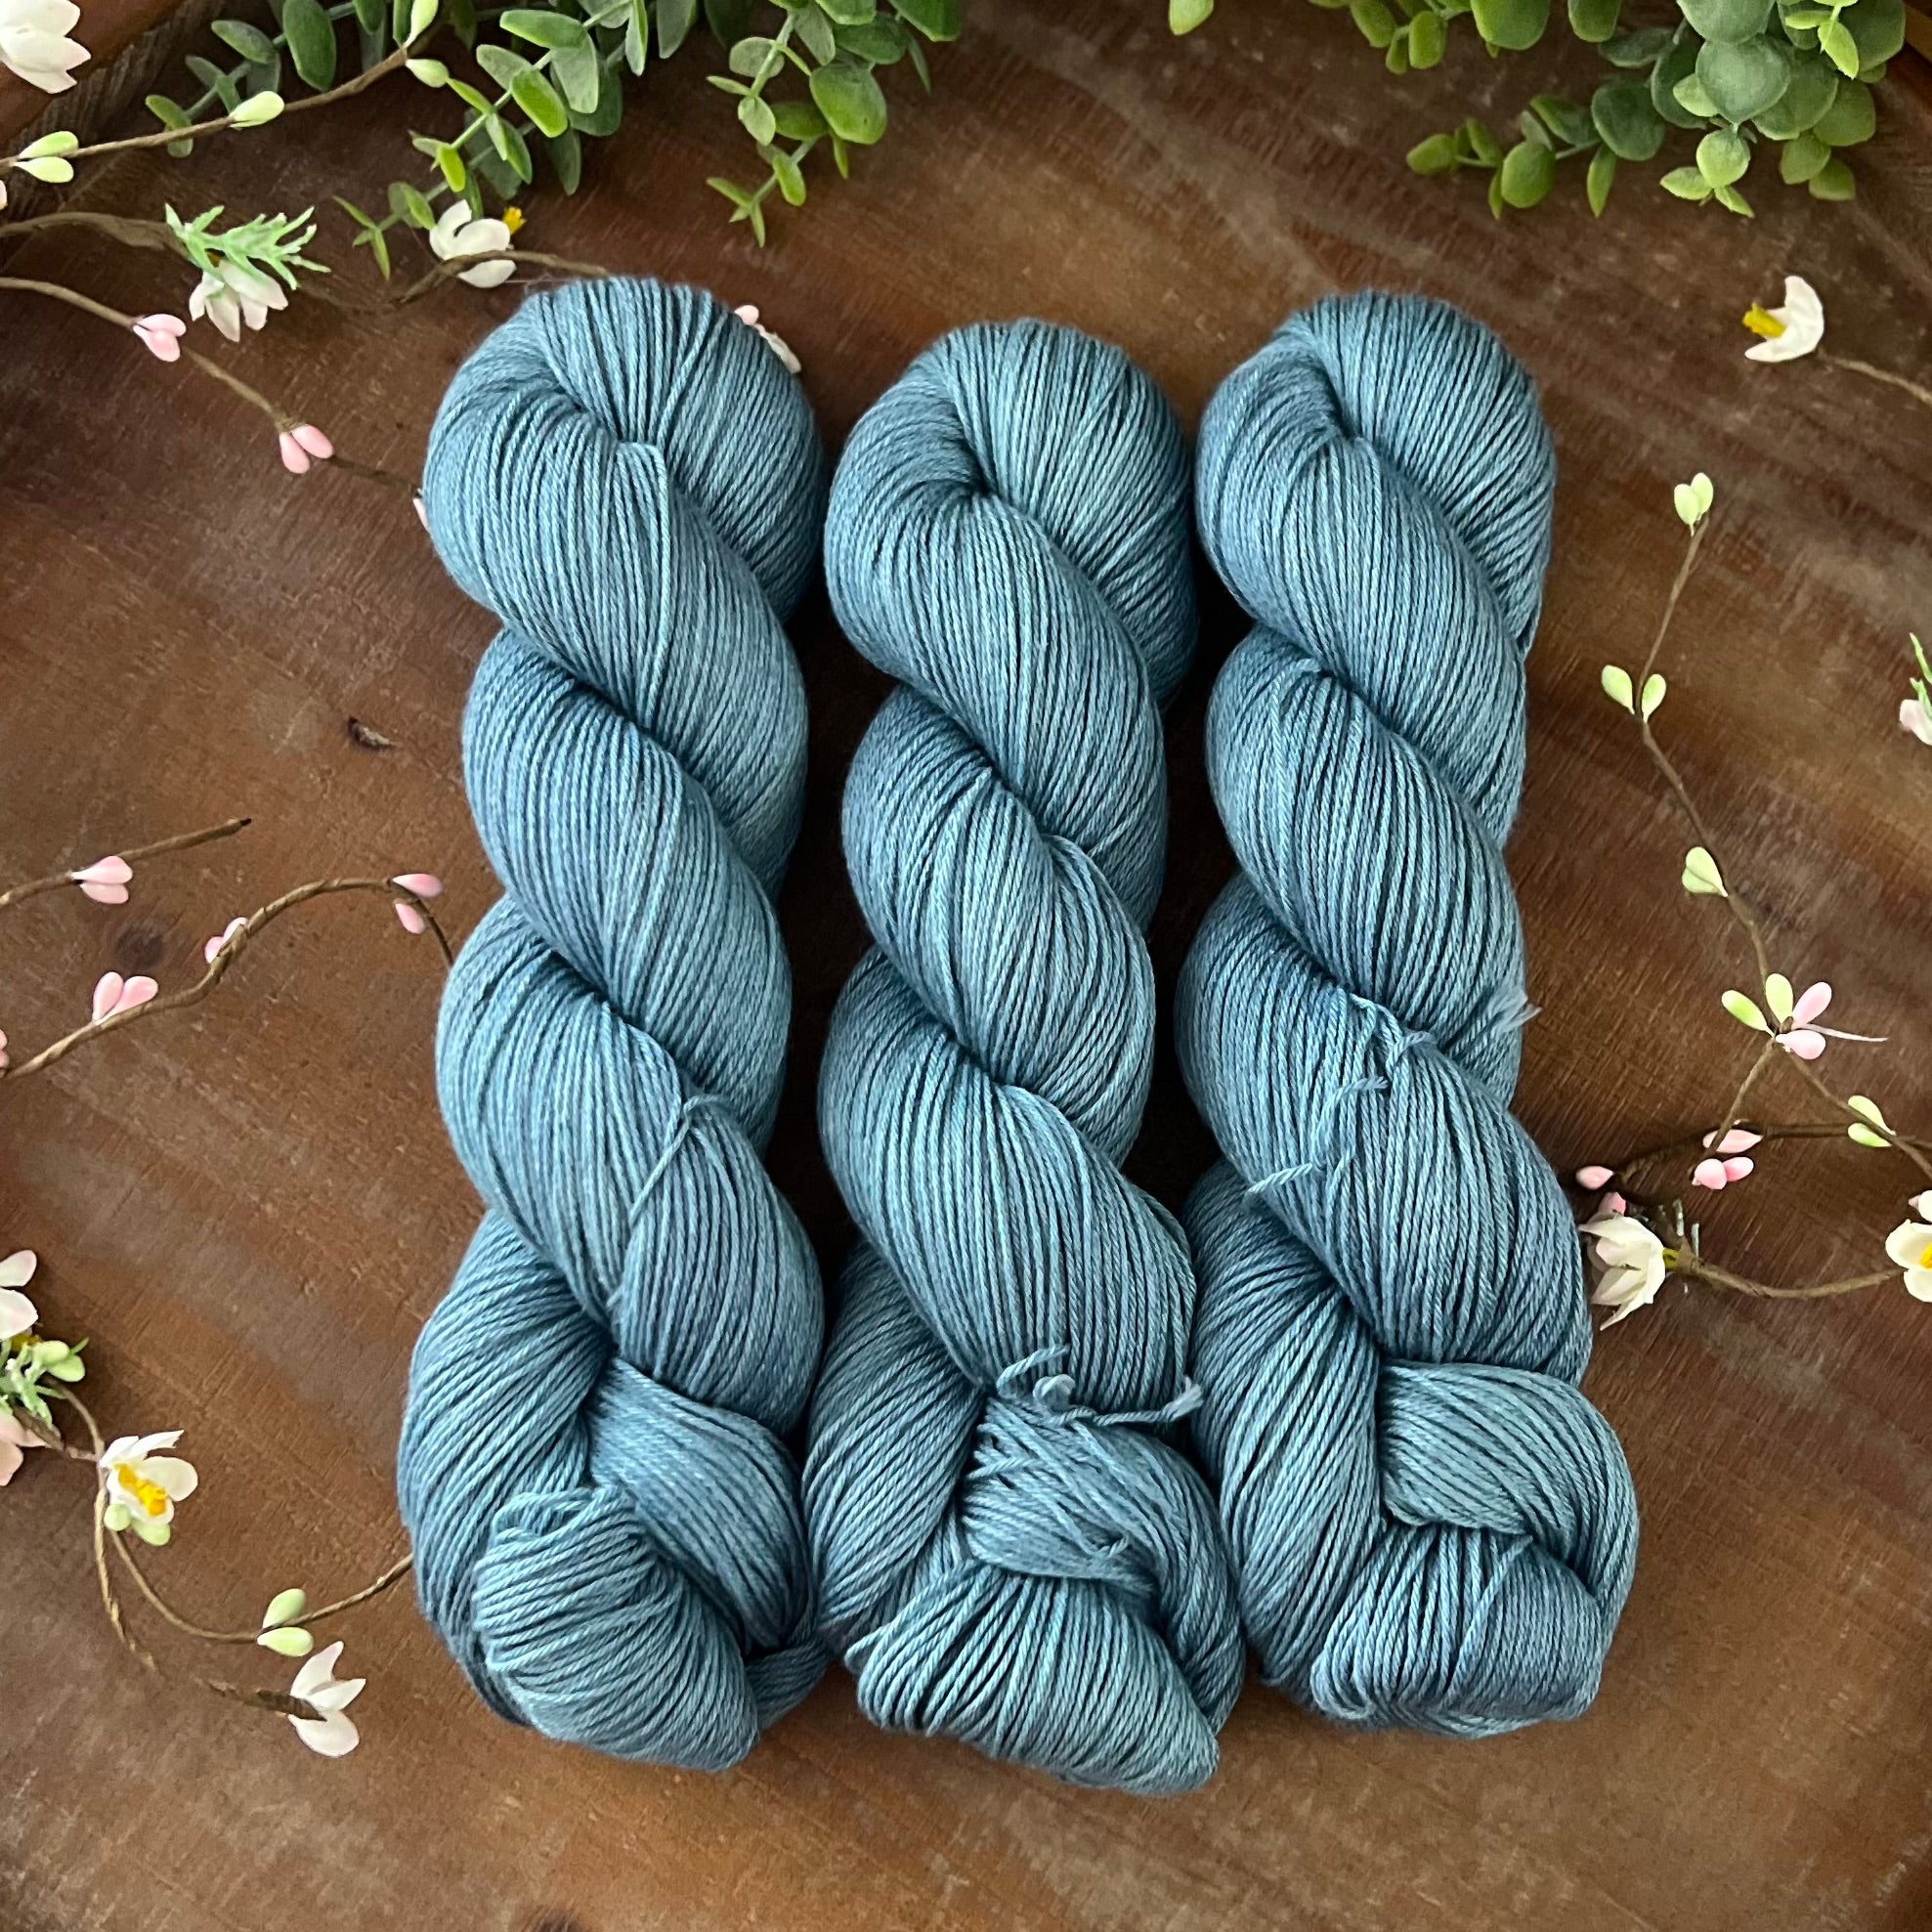 "Sea Foam" Merino Cotton 50/50 Hand-dyed Yarn